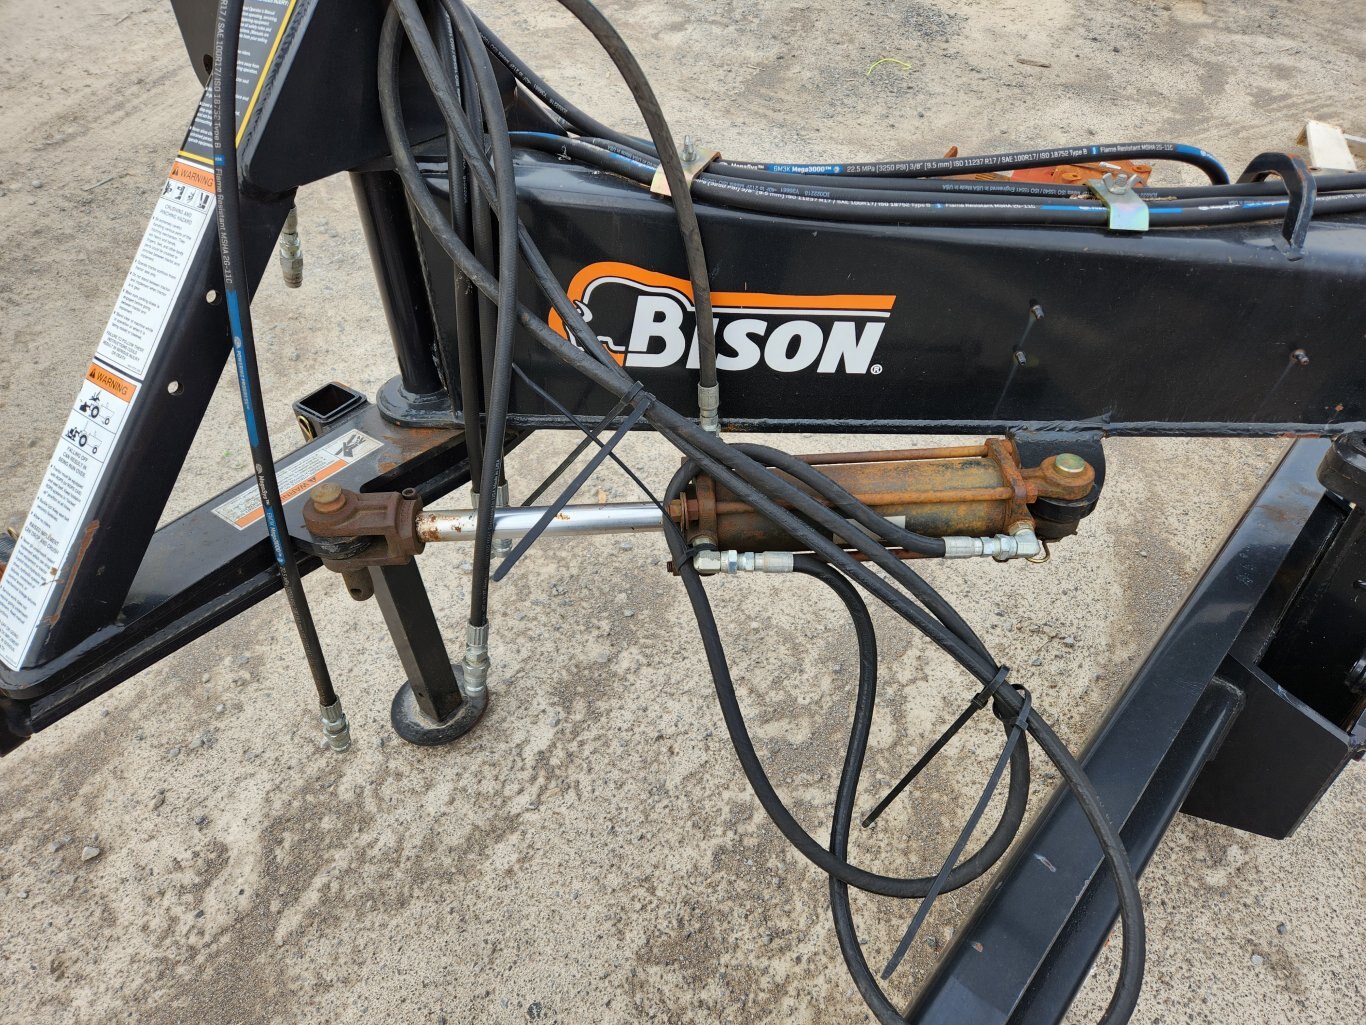 Bison NB120 270 scraper blade